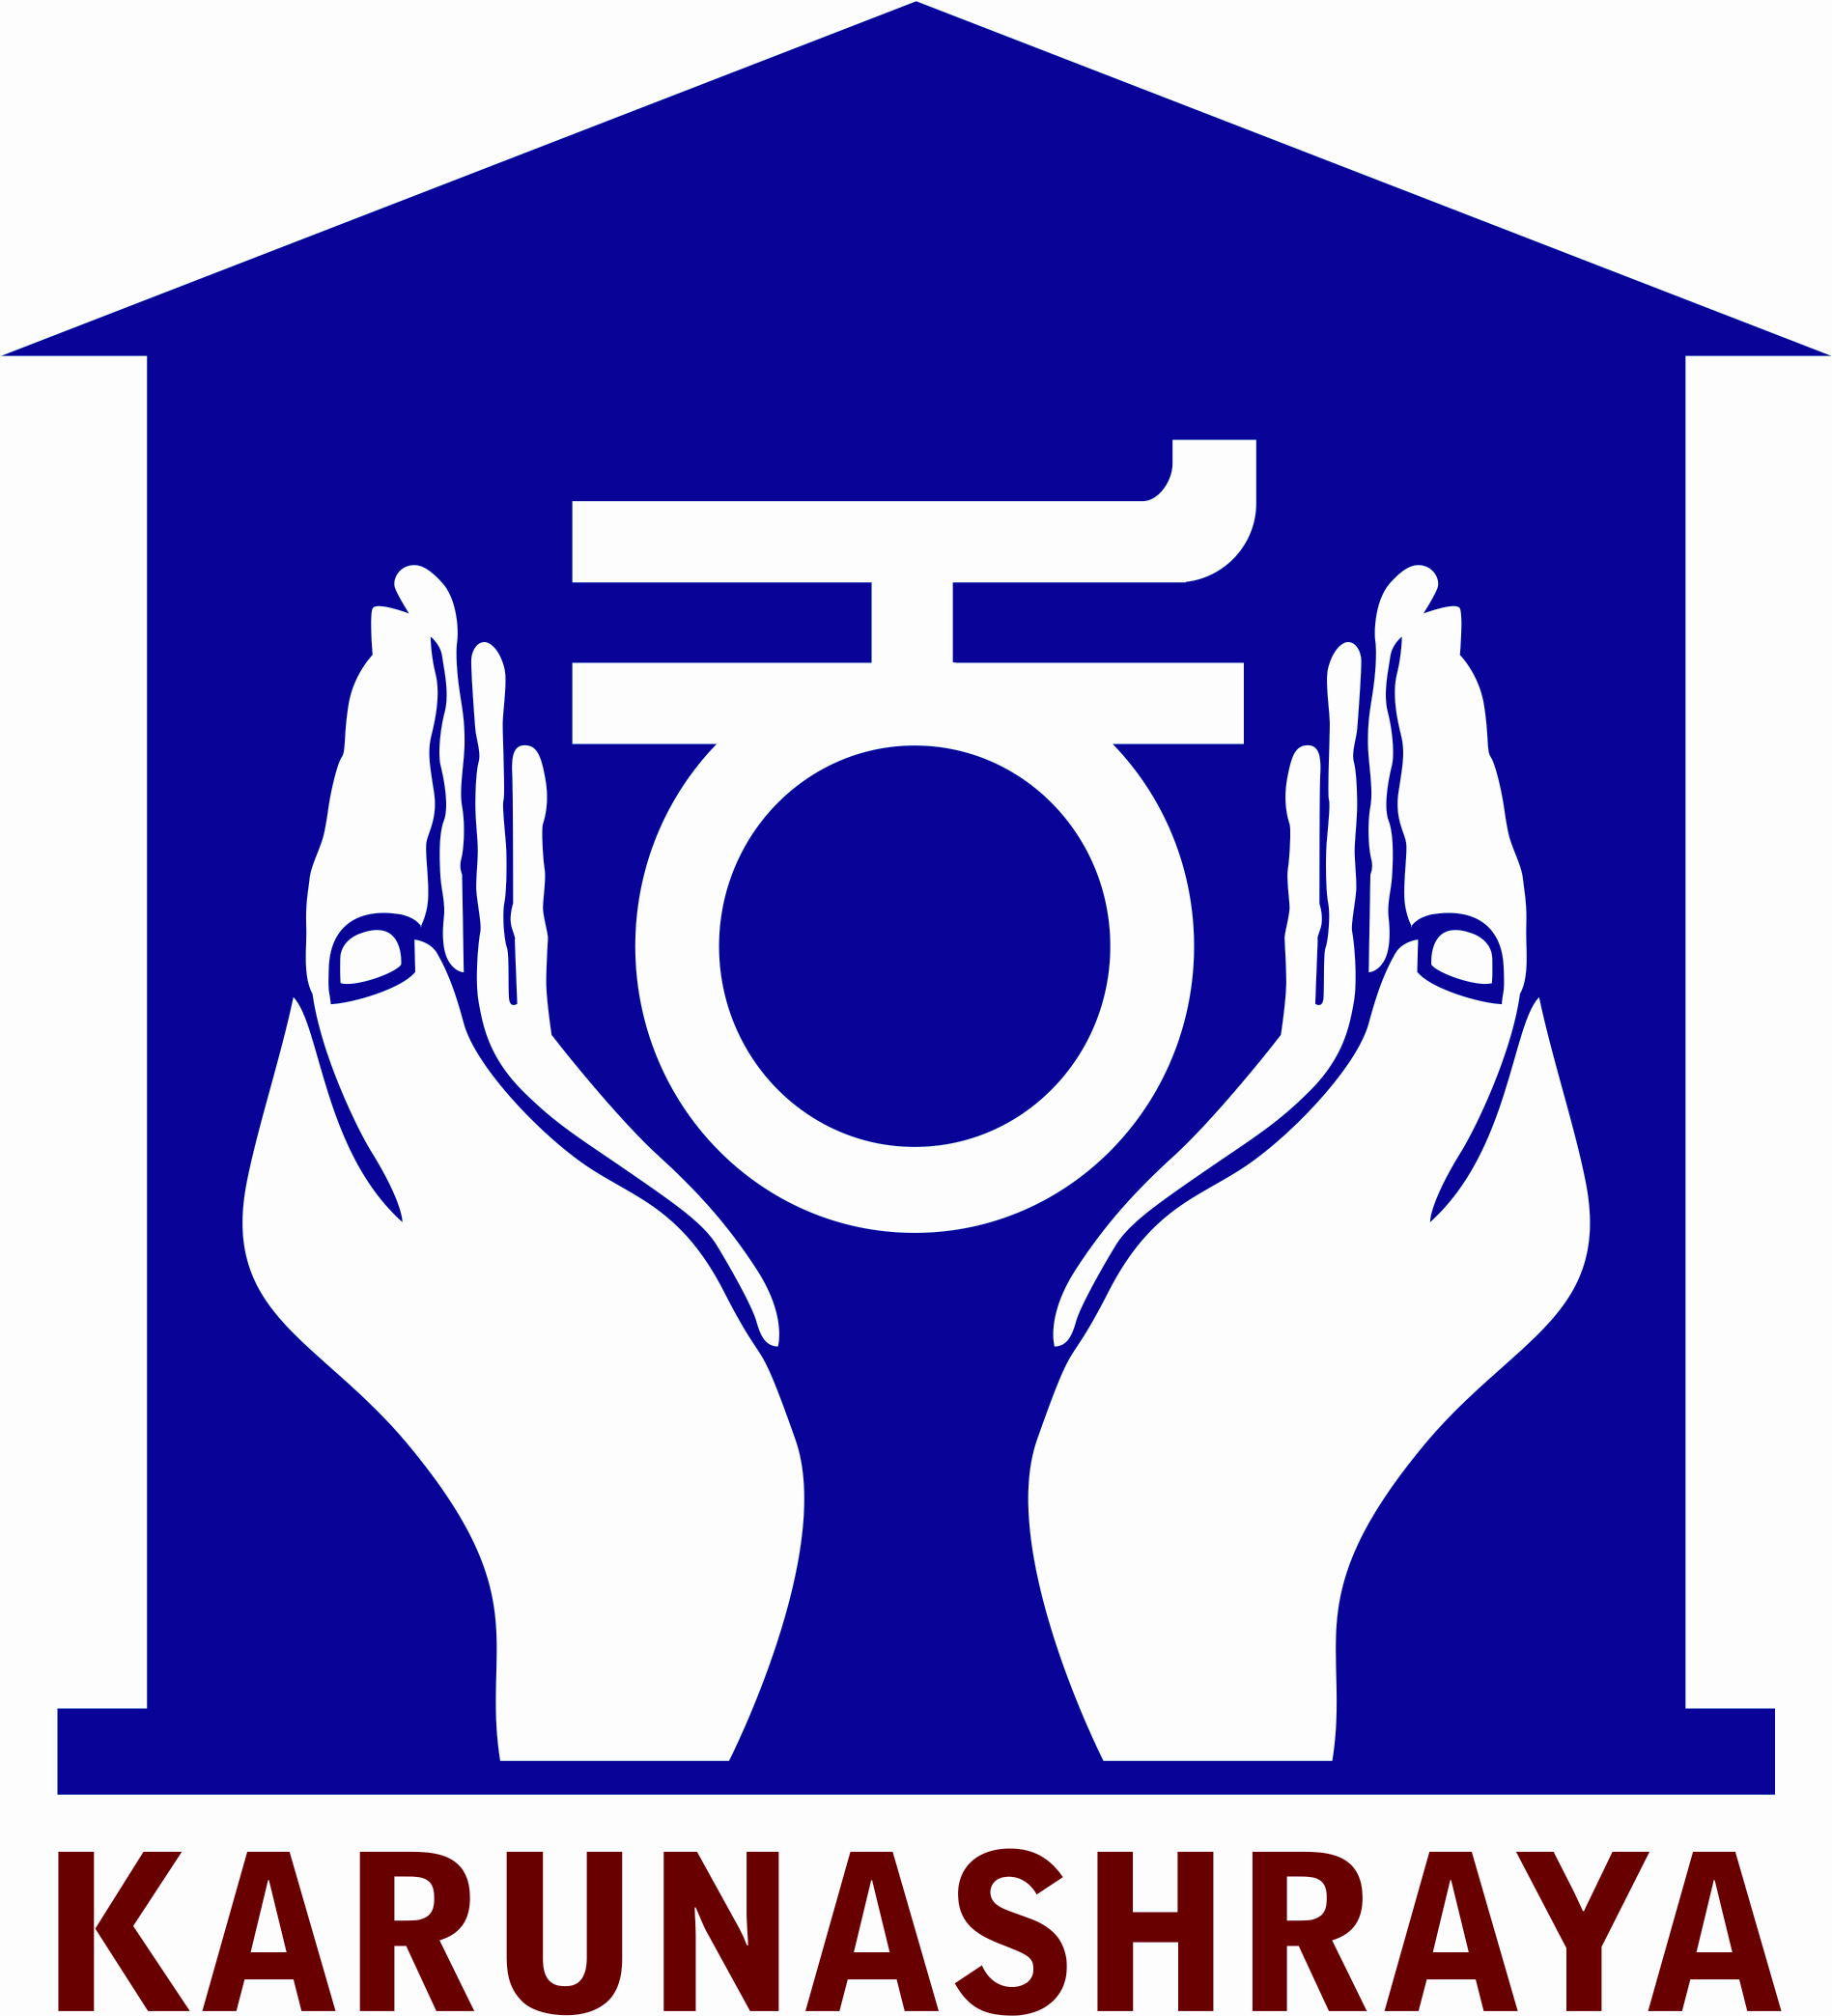 Karunashraya is a hospice from Bangalore Hospice Trust providing free palliative care for cancer patients. 
Contact: +91 80 4268 5666 info@karunashraya.org